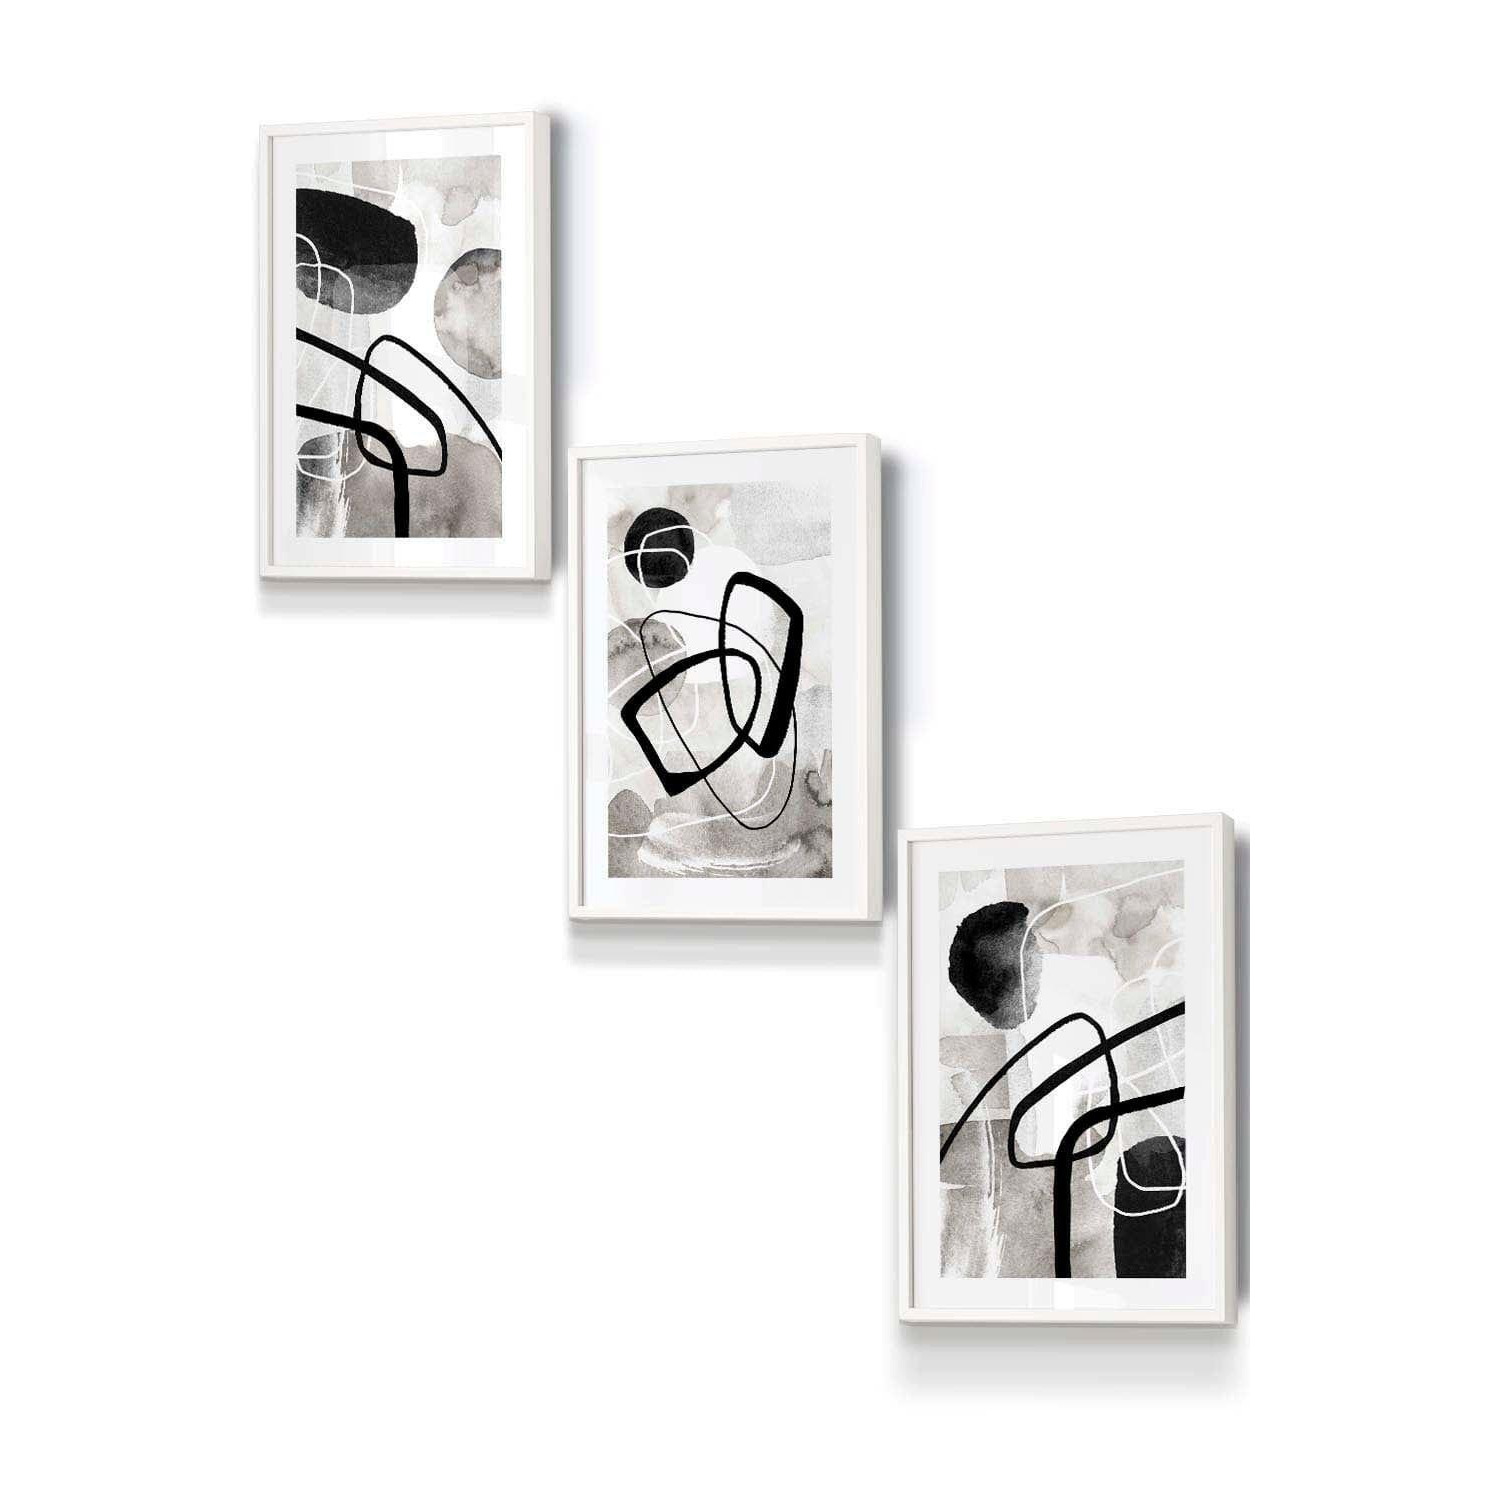 Abstract Black Grey Watercolour Shapes Framed Wall Art - Small - image 1